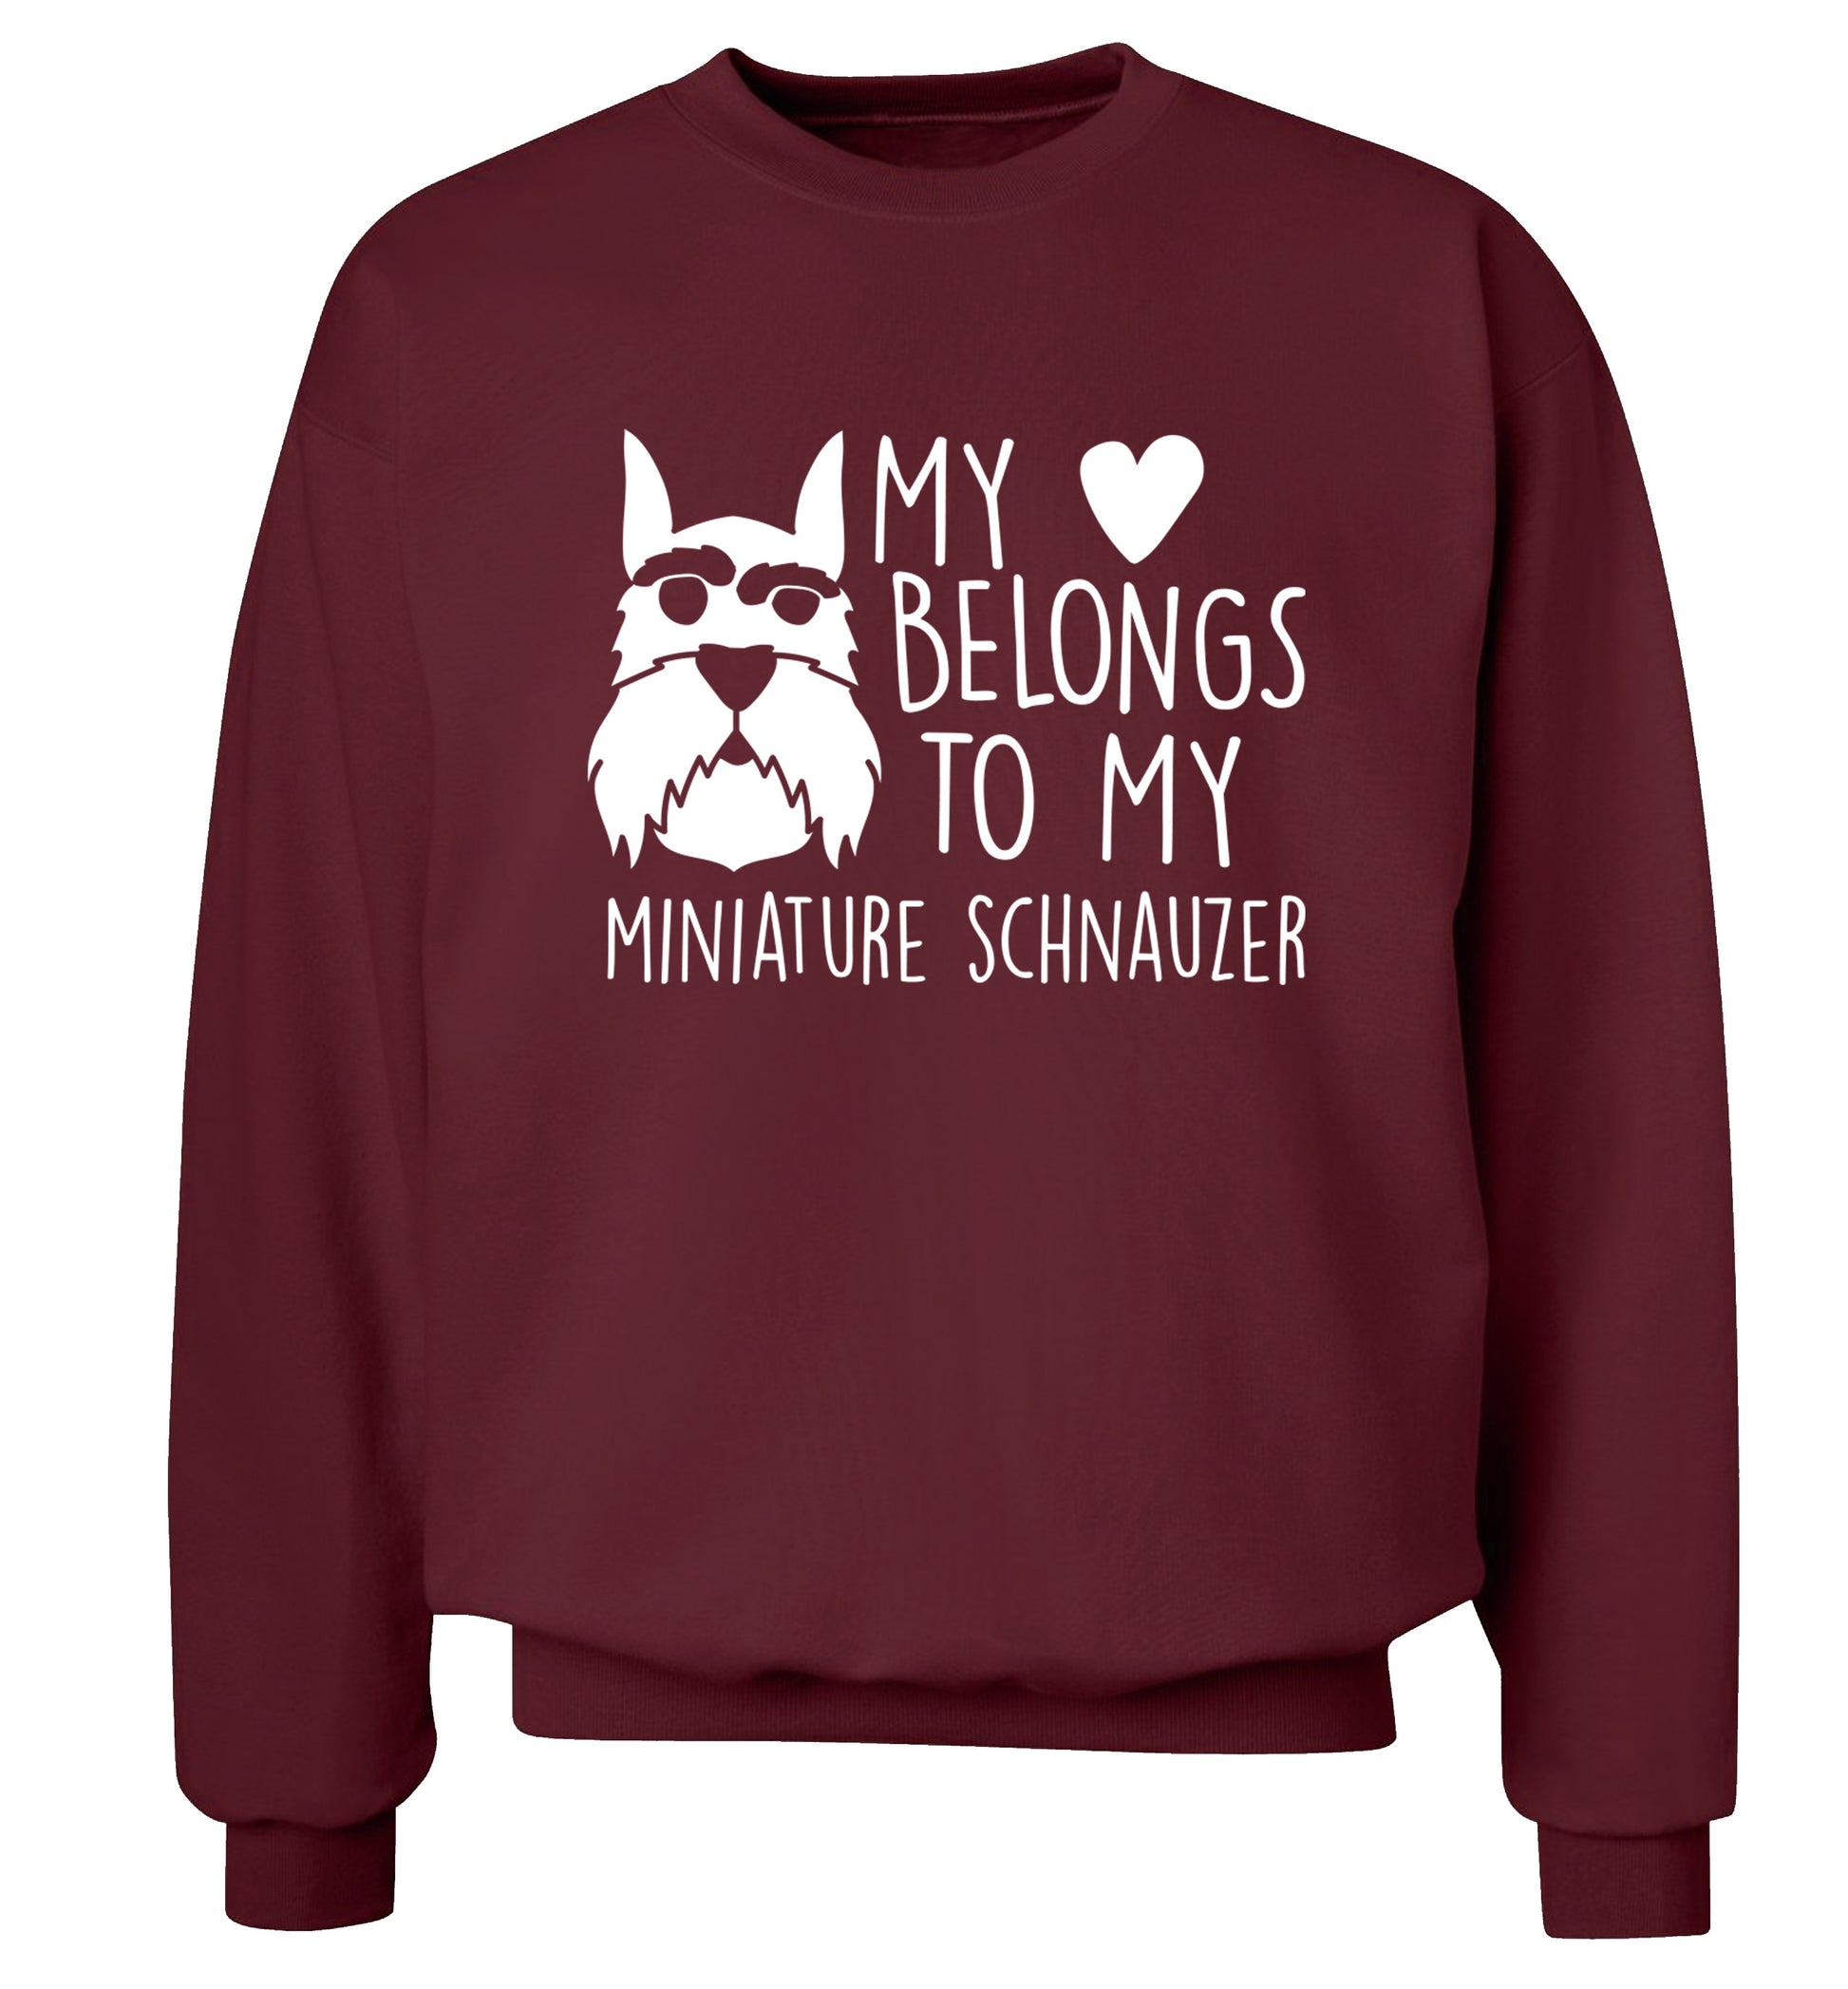 My heart belongs to my miniature schnauzer Adult's unisex maroon Sweater 2XL